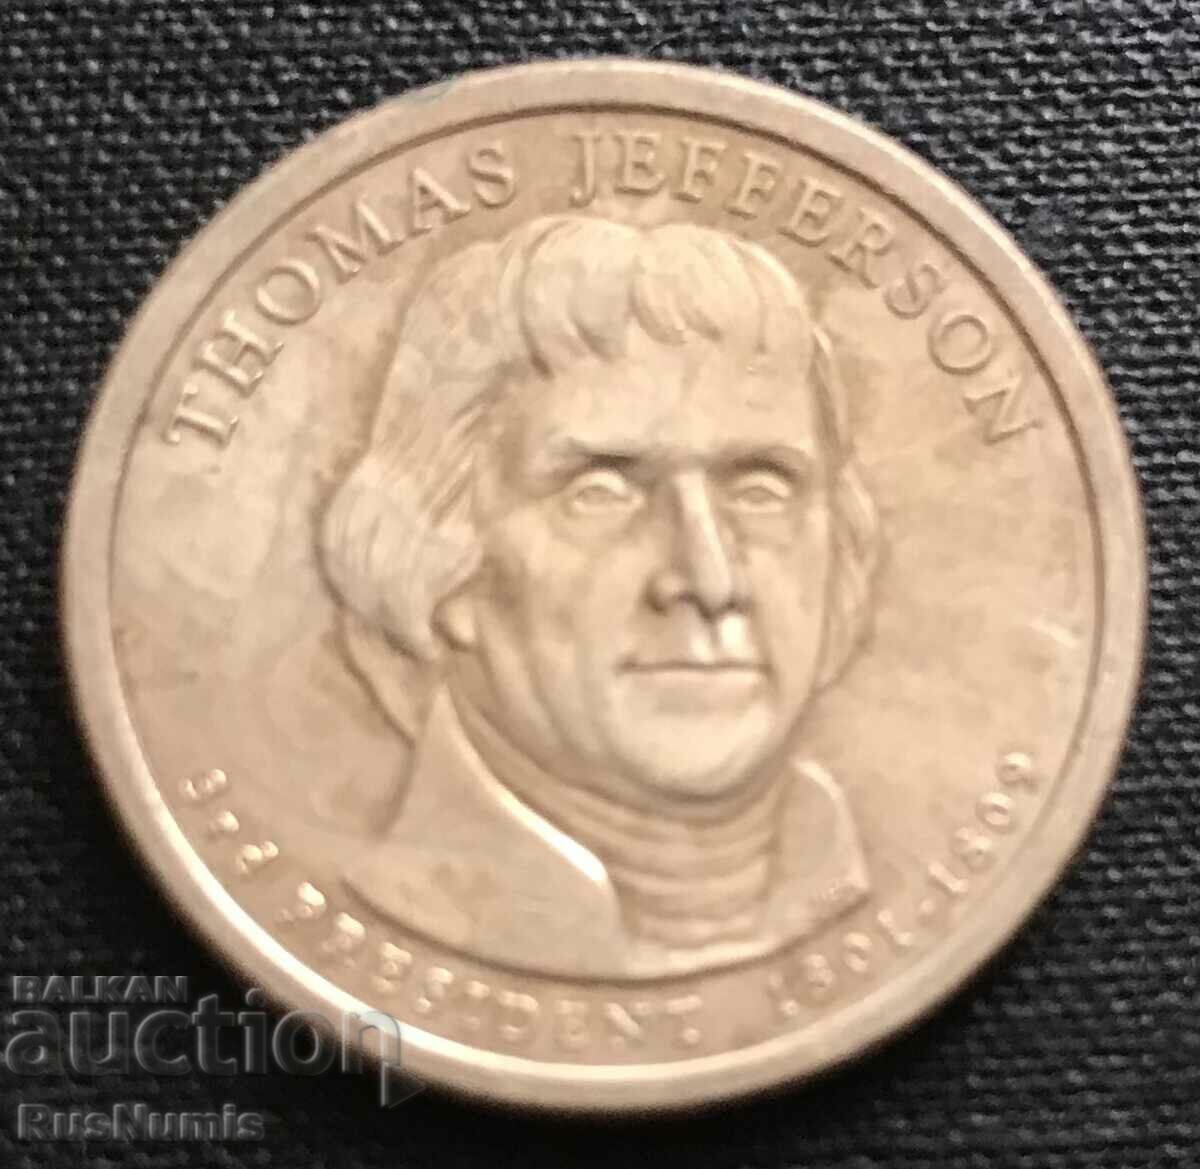 USA. 1 dollar 2007(P). Thomas Jefferson.